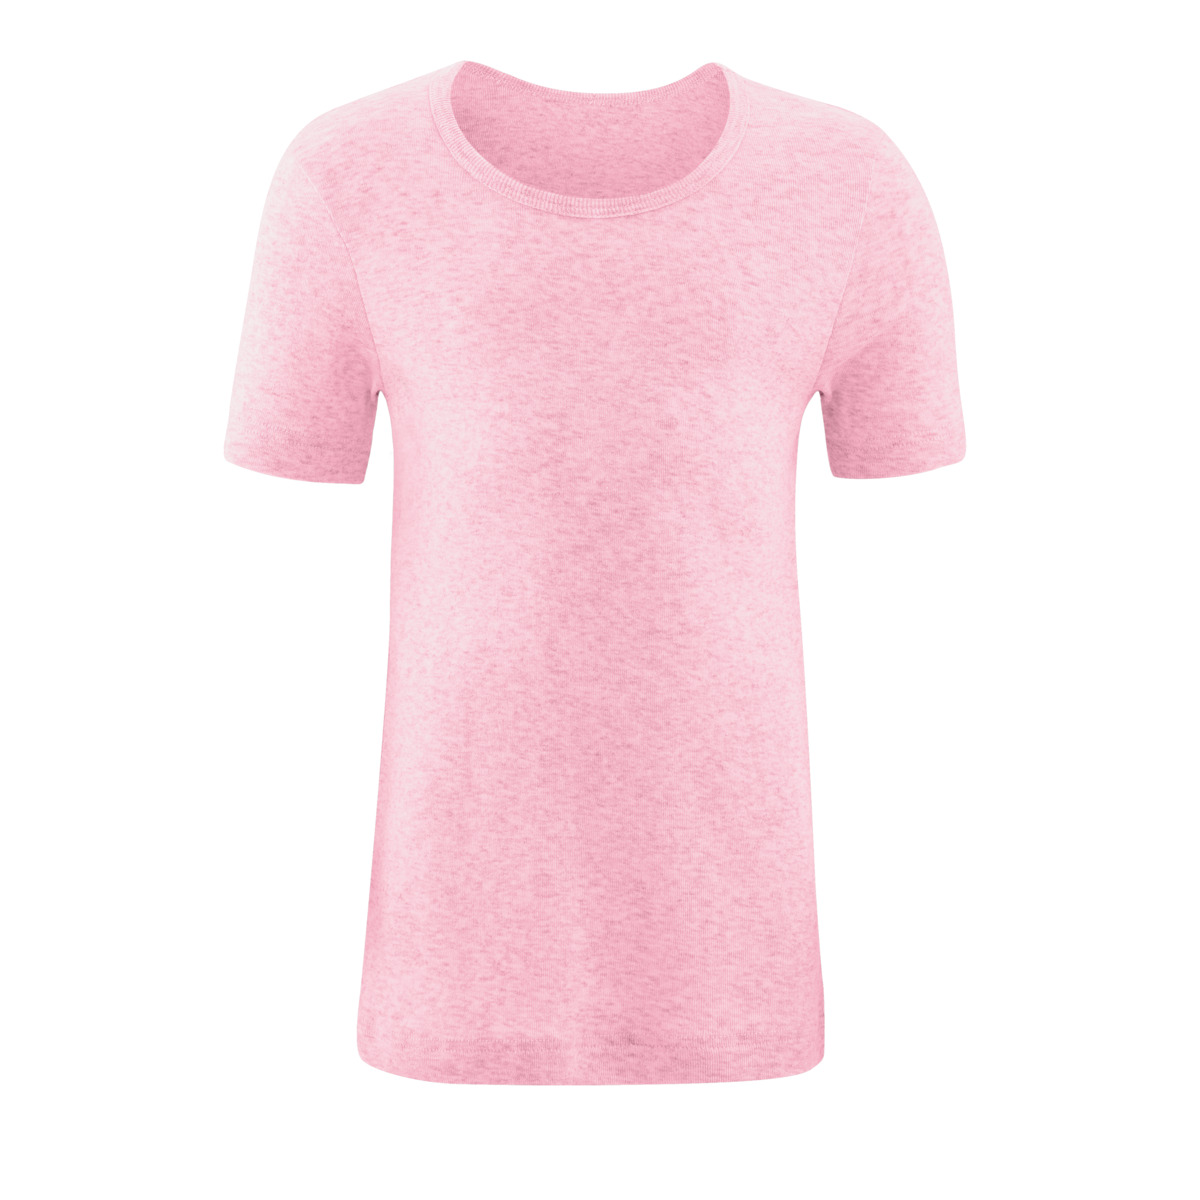 Pink Short-sleeved shirt, GOAT